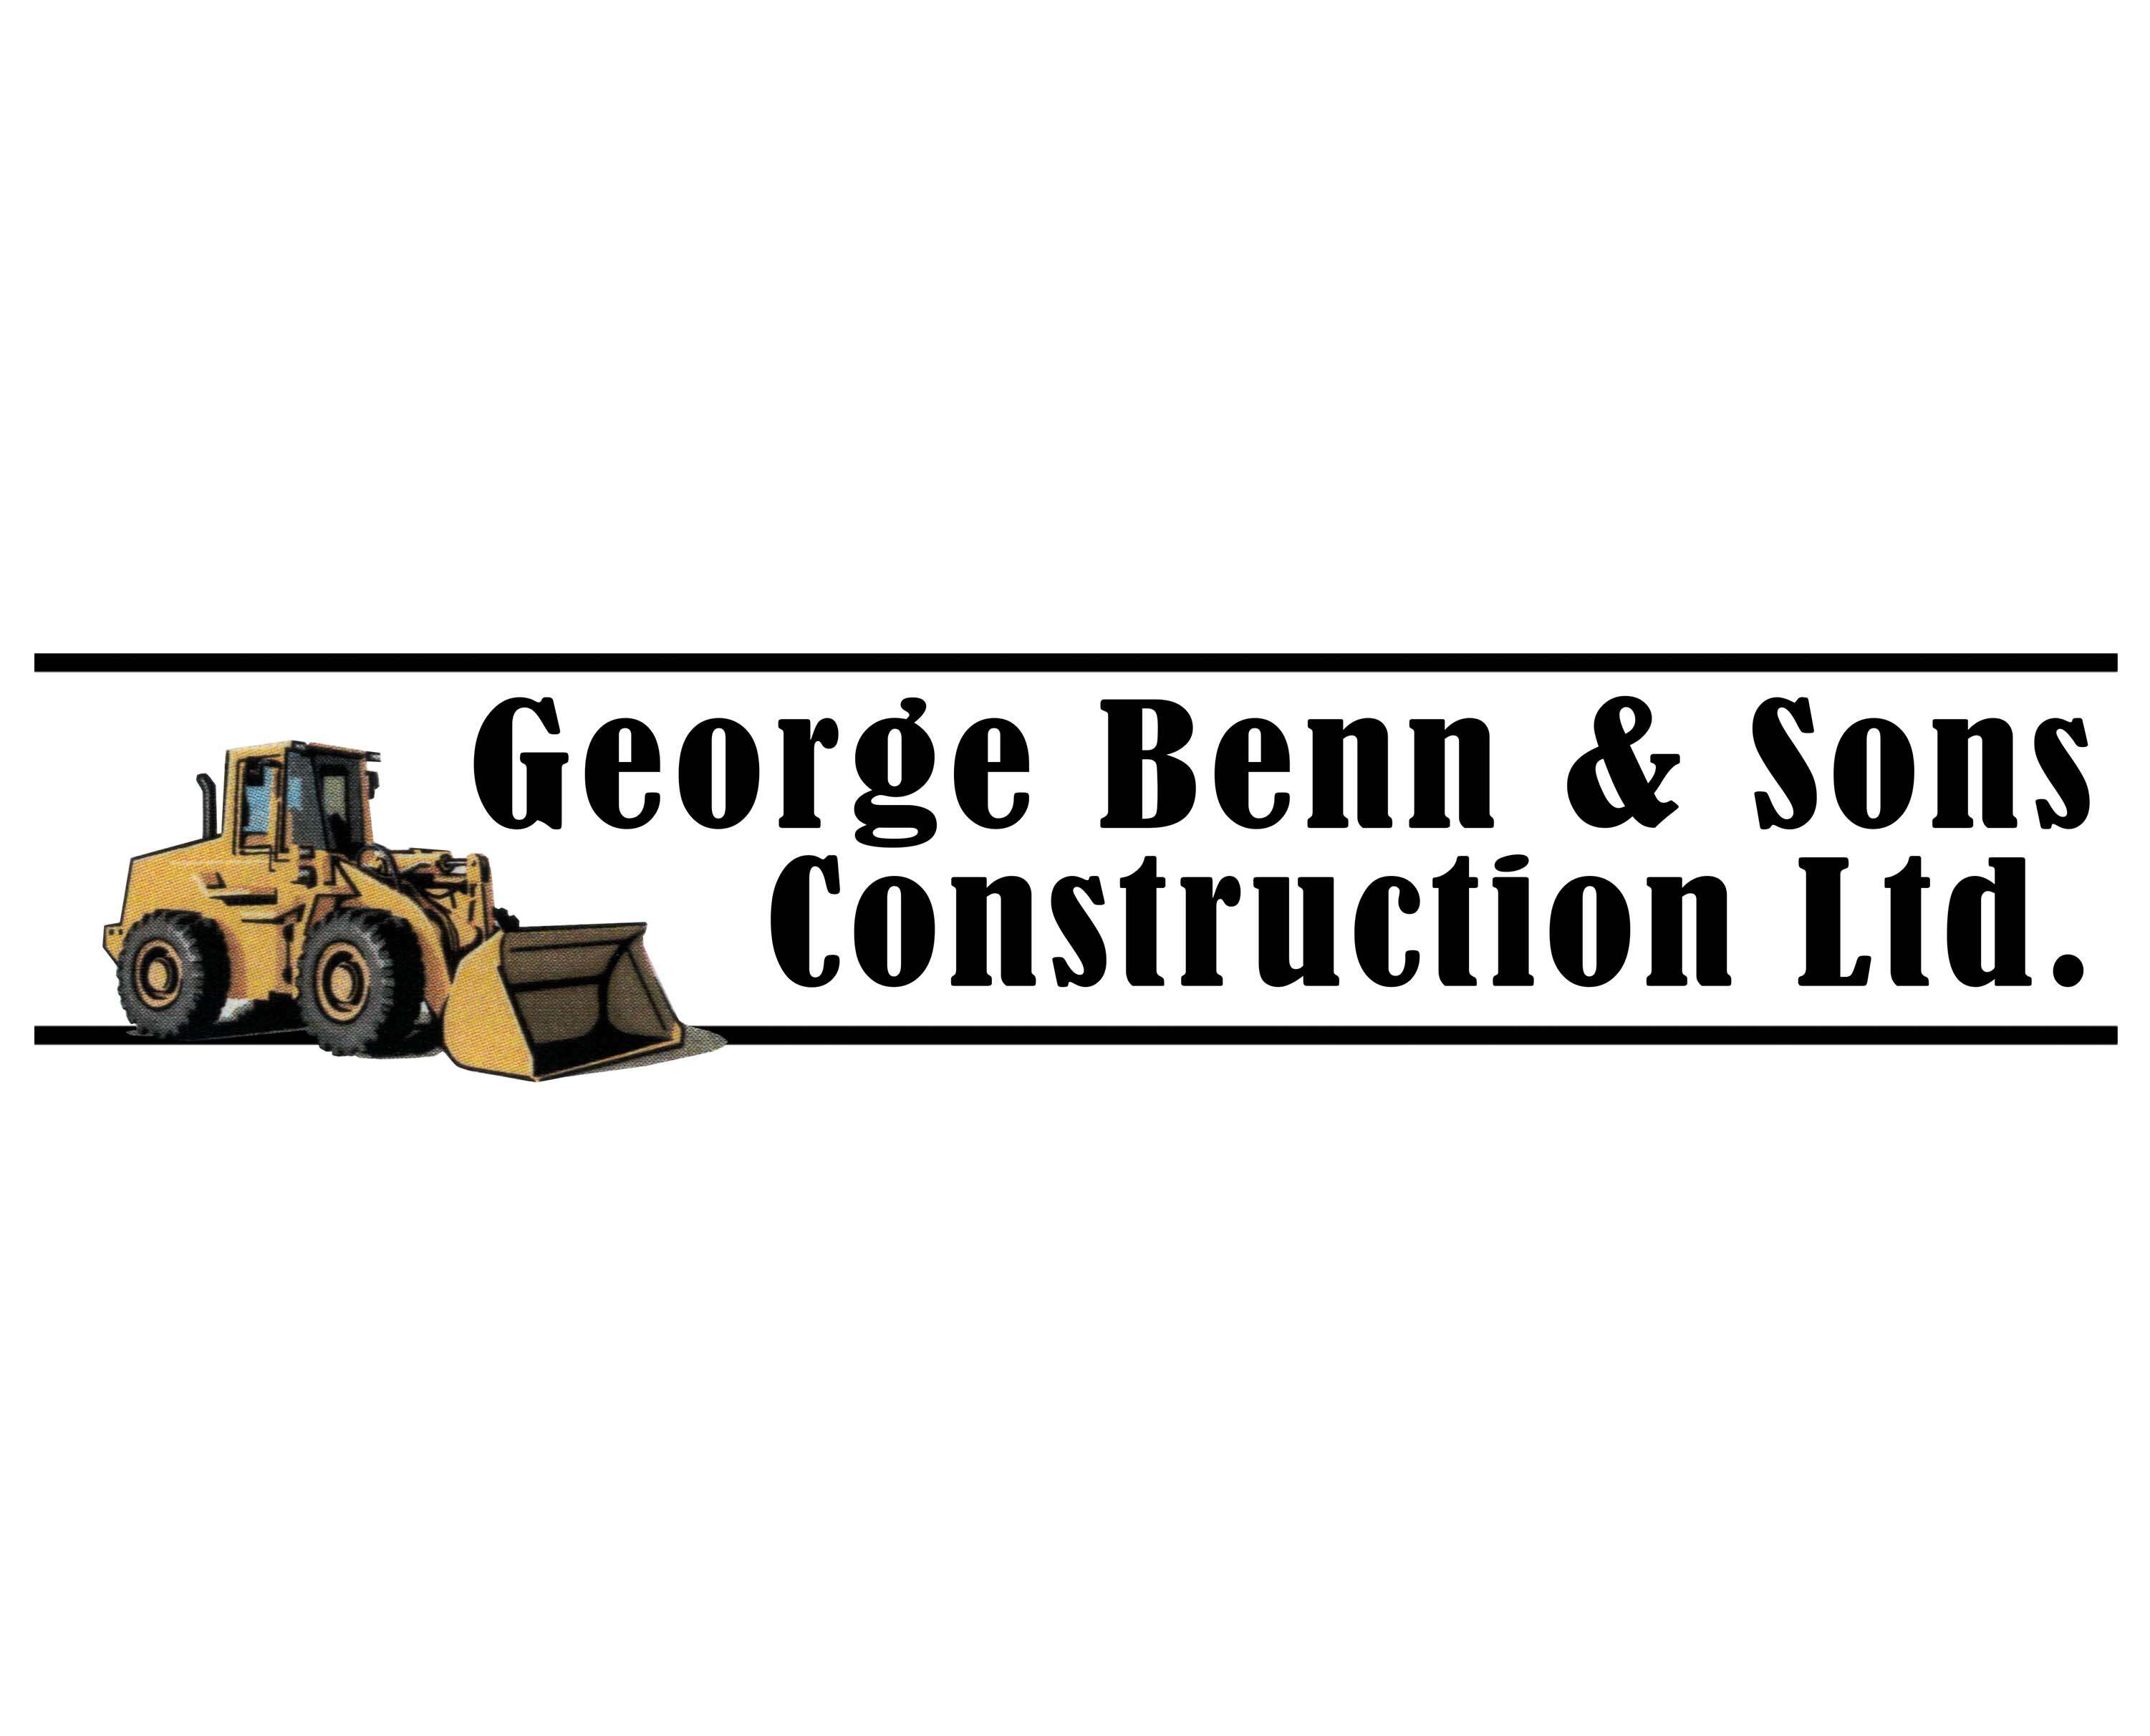 George Benn & Sons Construction